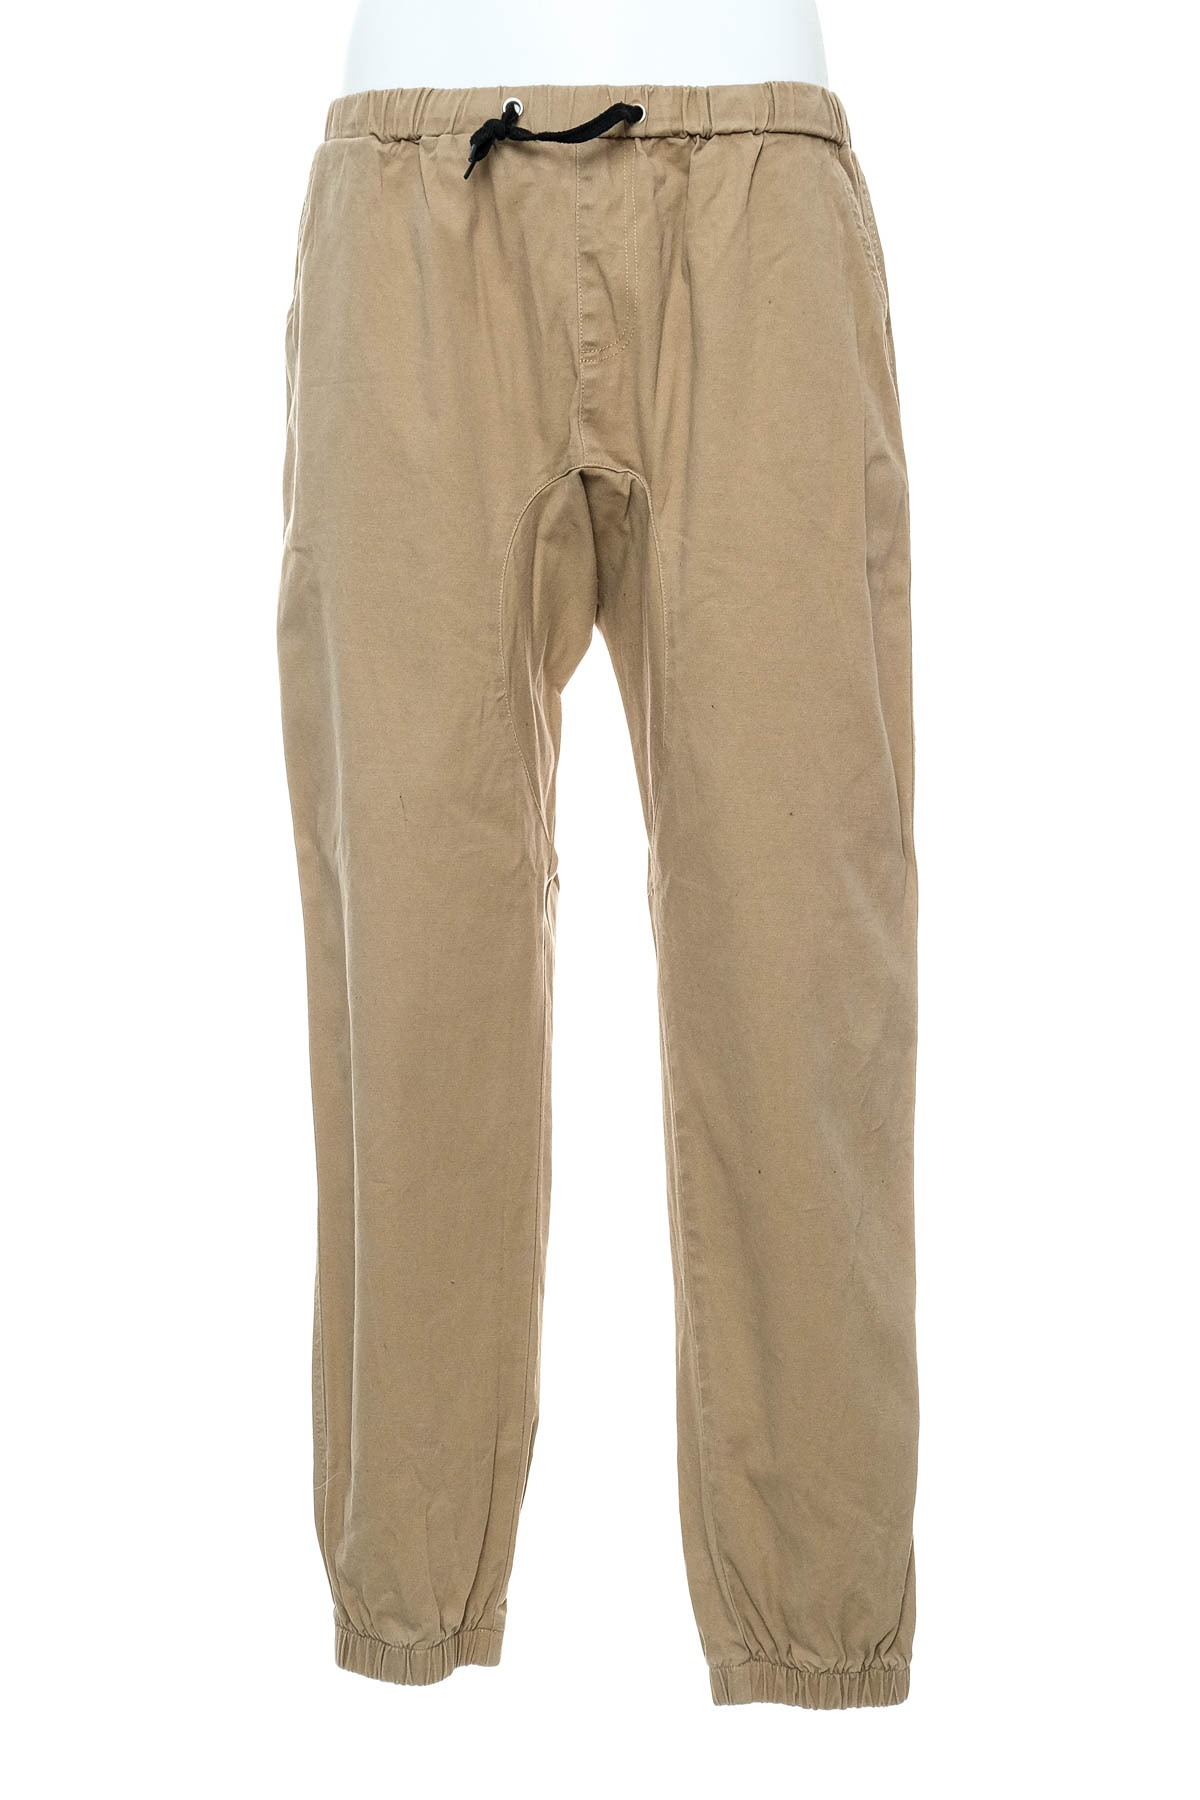 Pantalon pentru bărbați - Yidarton - 0